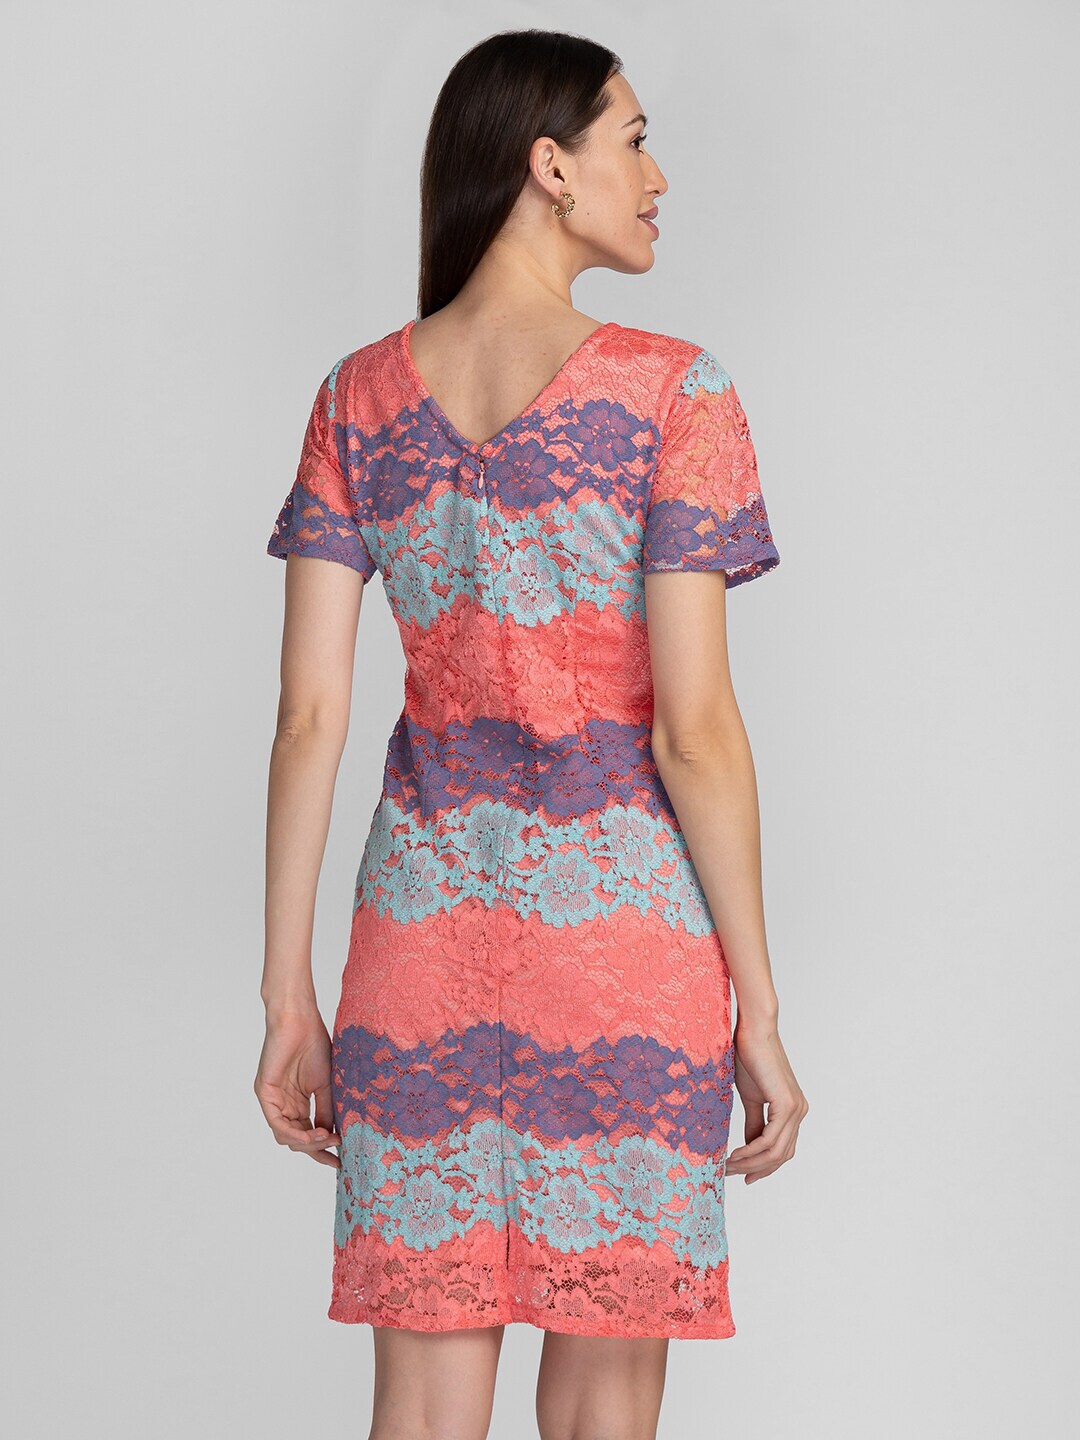 Globus Coral Self Design A-Line Lace Dress